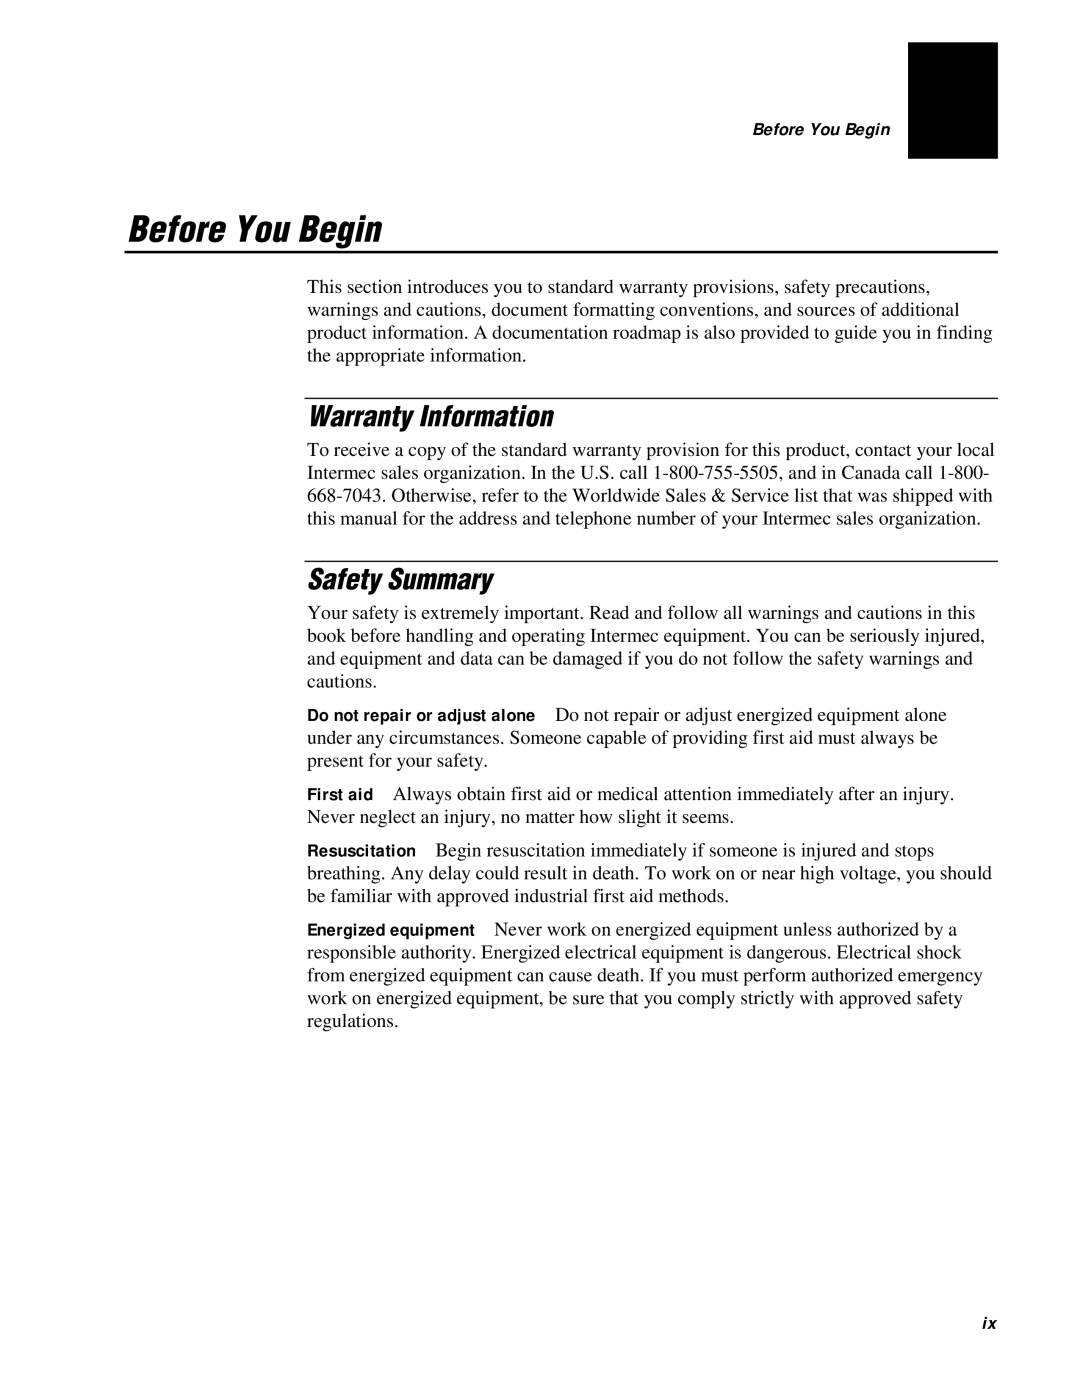 IBM EasyCoder 3400e user manual Before You Begin, Warranty Information, Safety Summary 